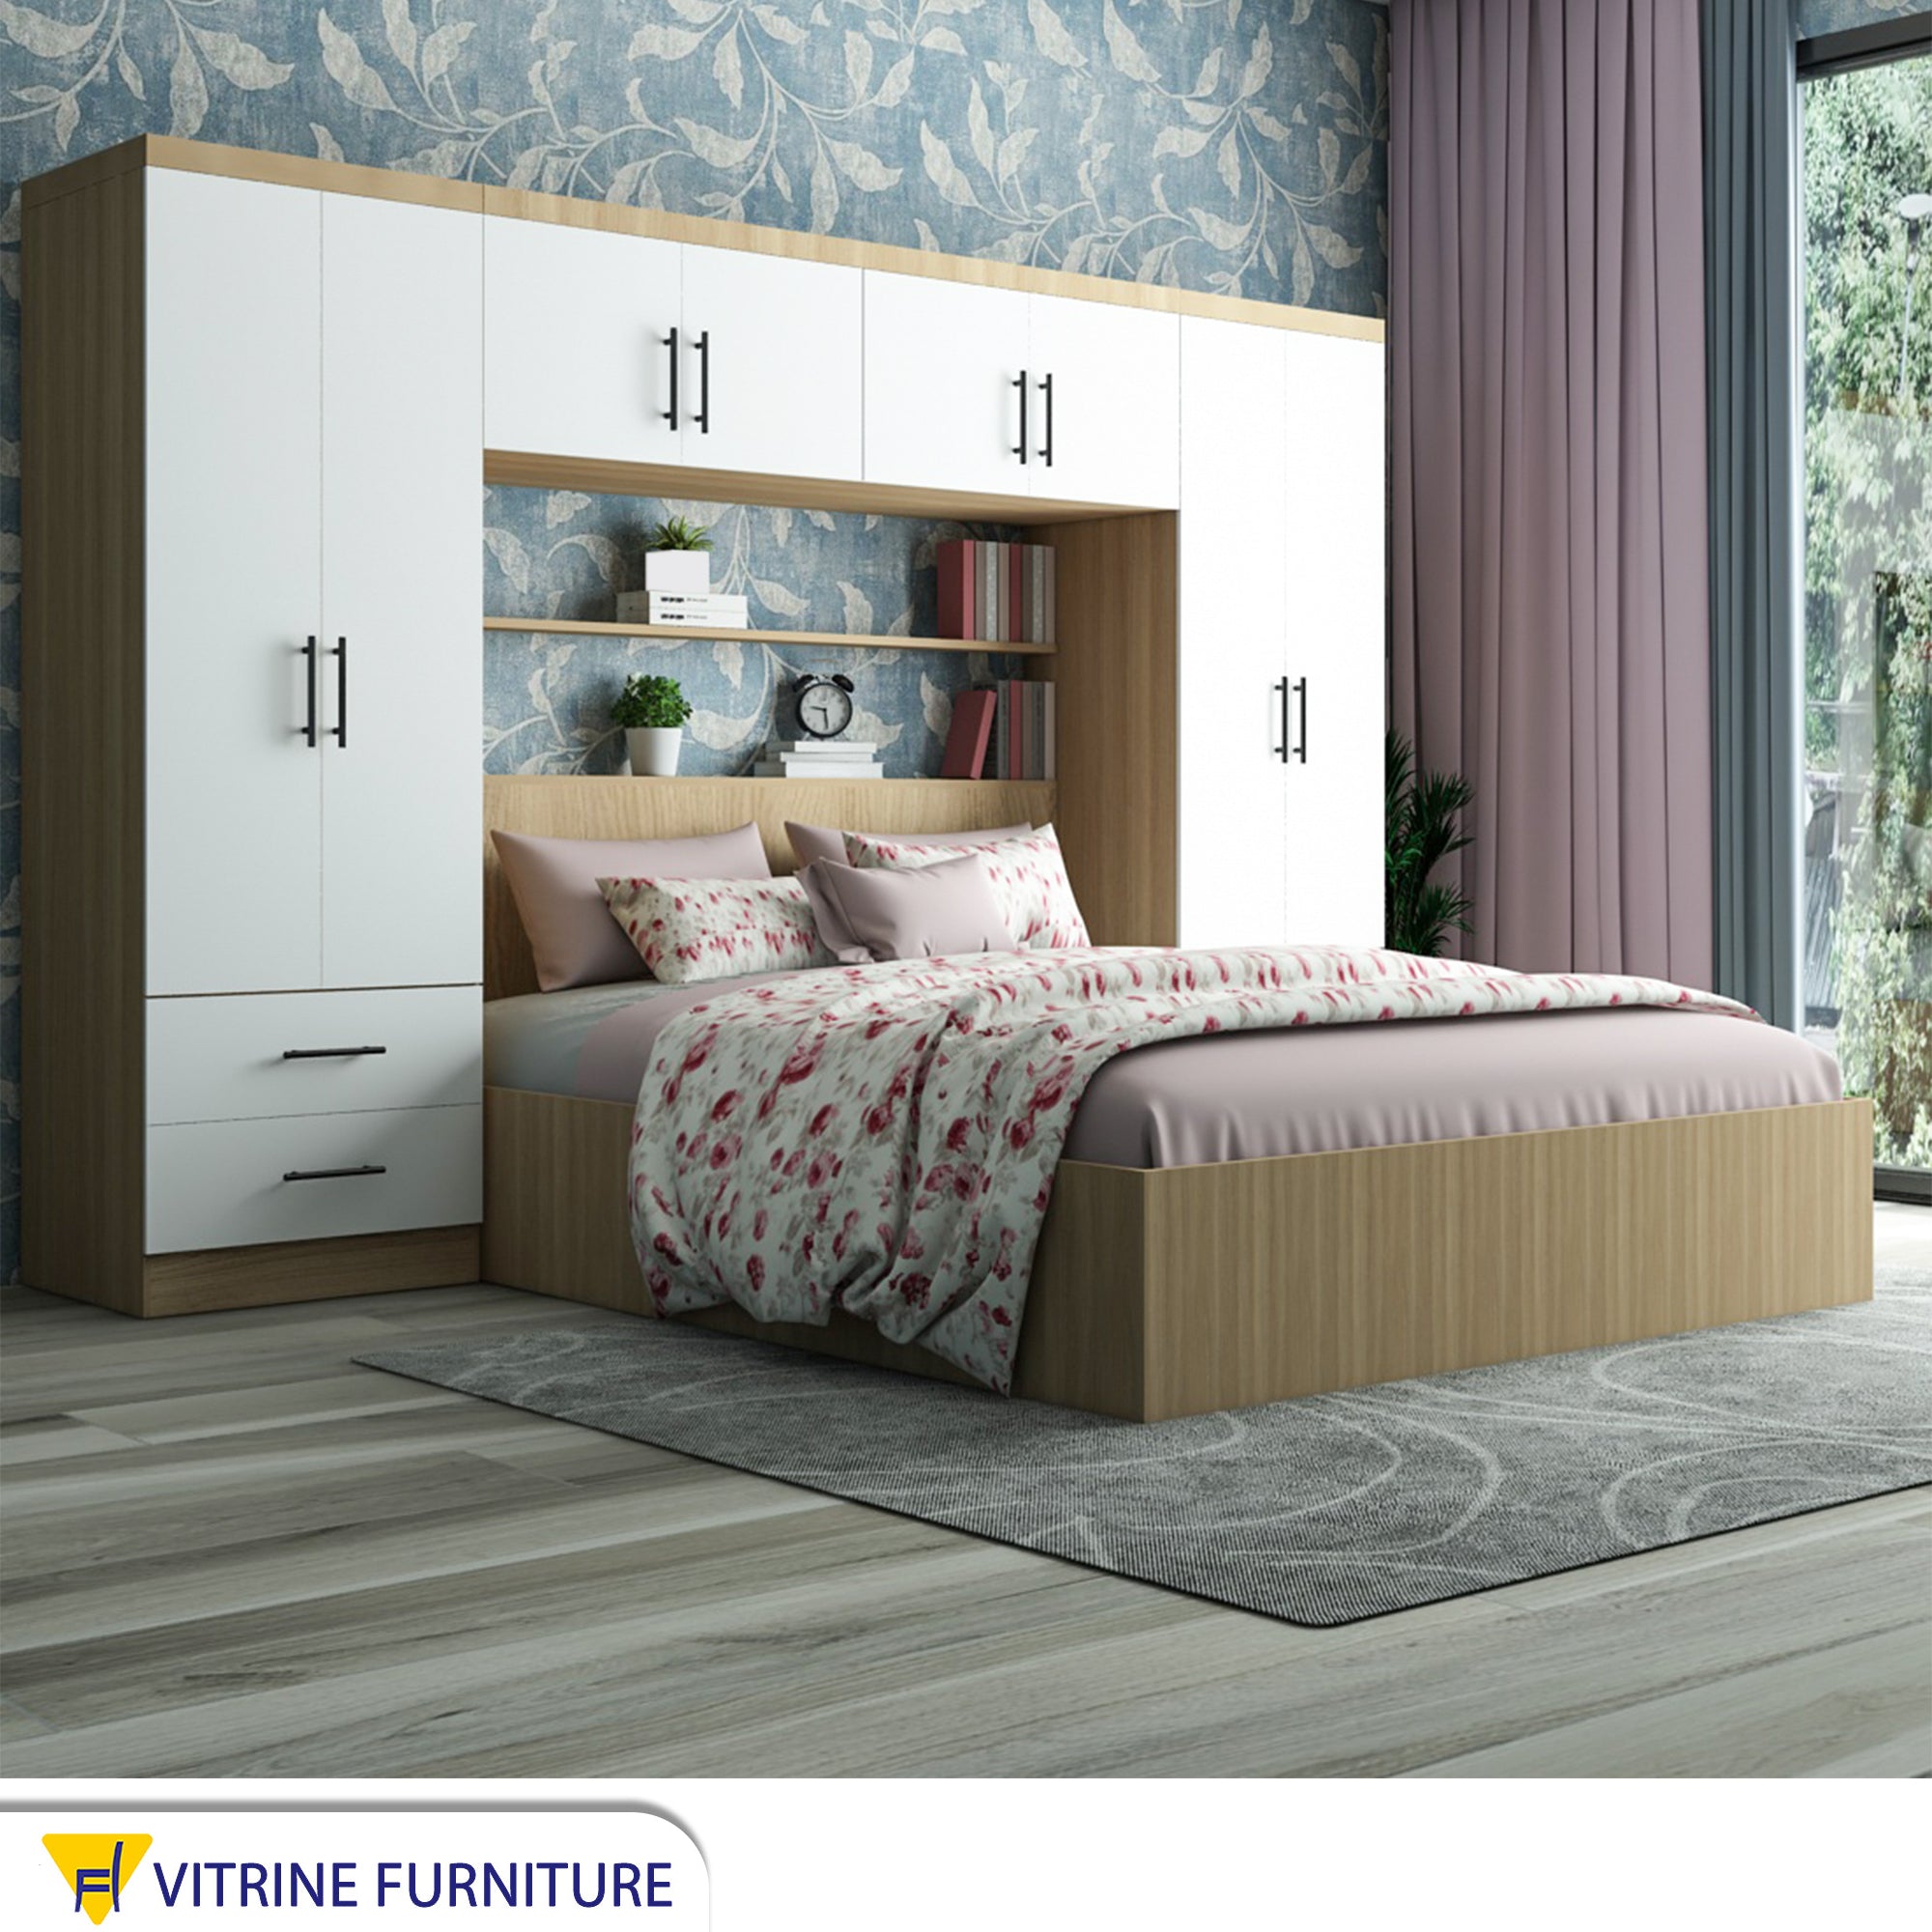 Master bedroom in wooden color